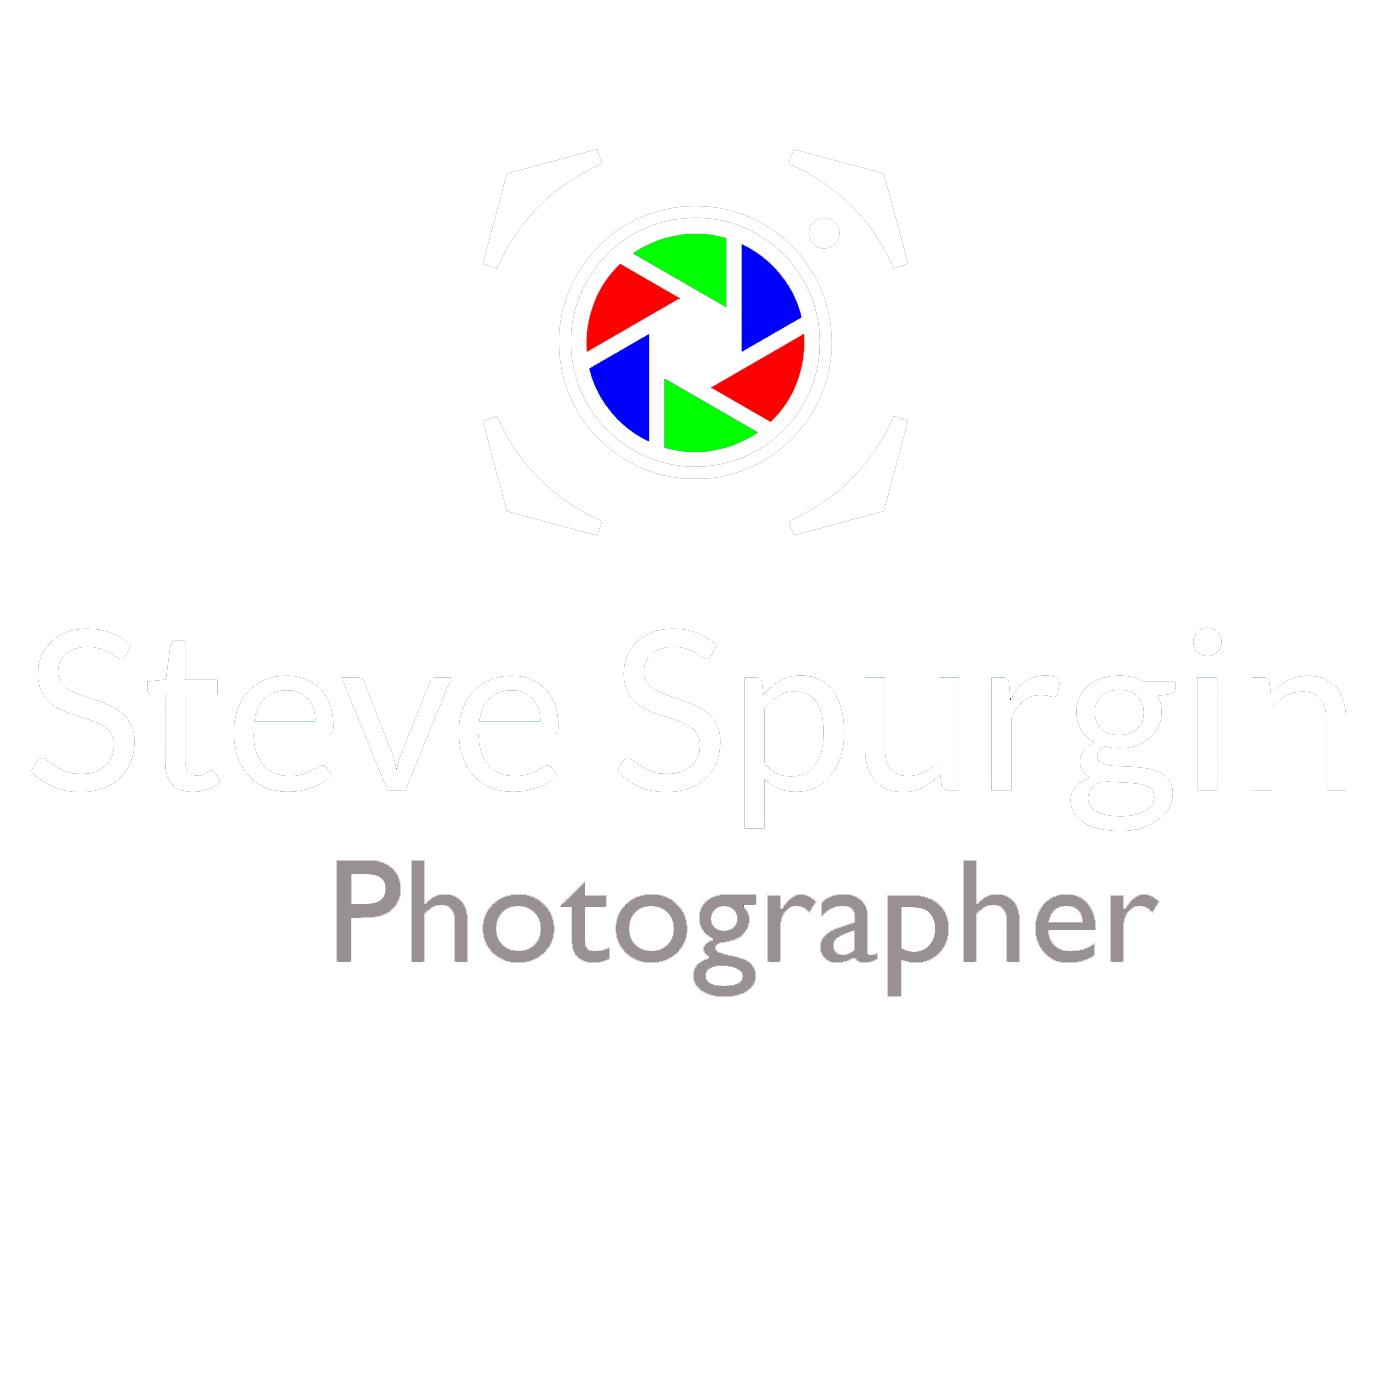 Steve Spurgin